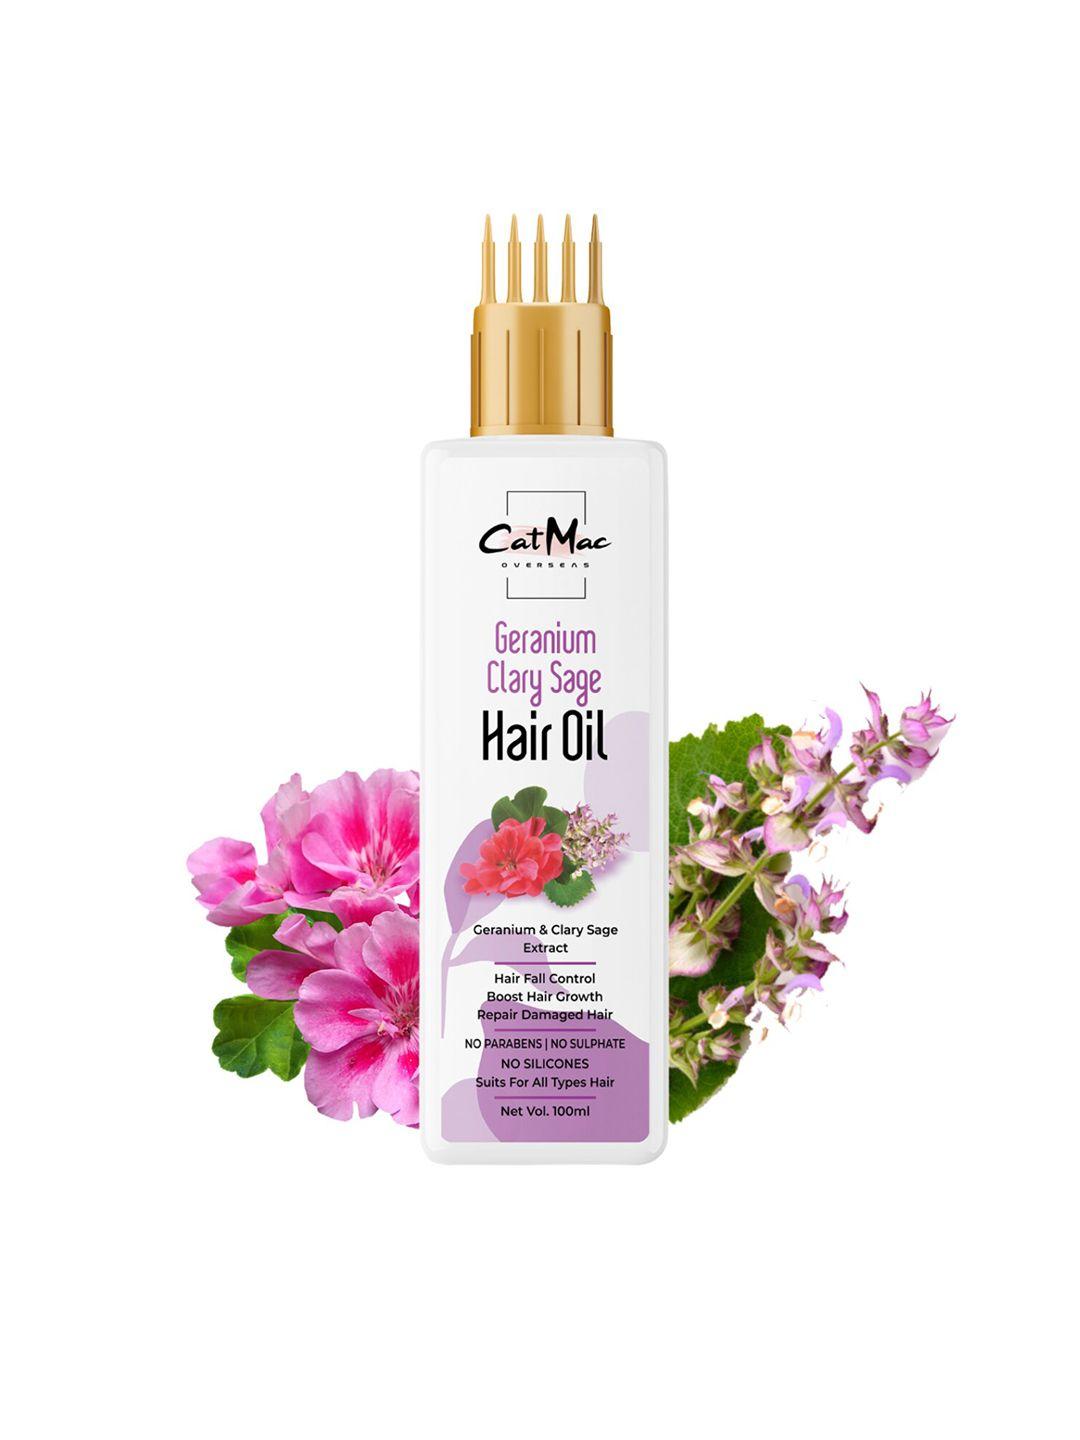 catmac paraben free geranium clary sage hair oil with jojoba to boost hair growth - 100 ml